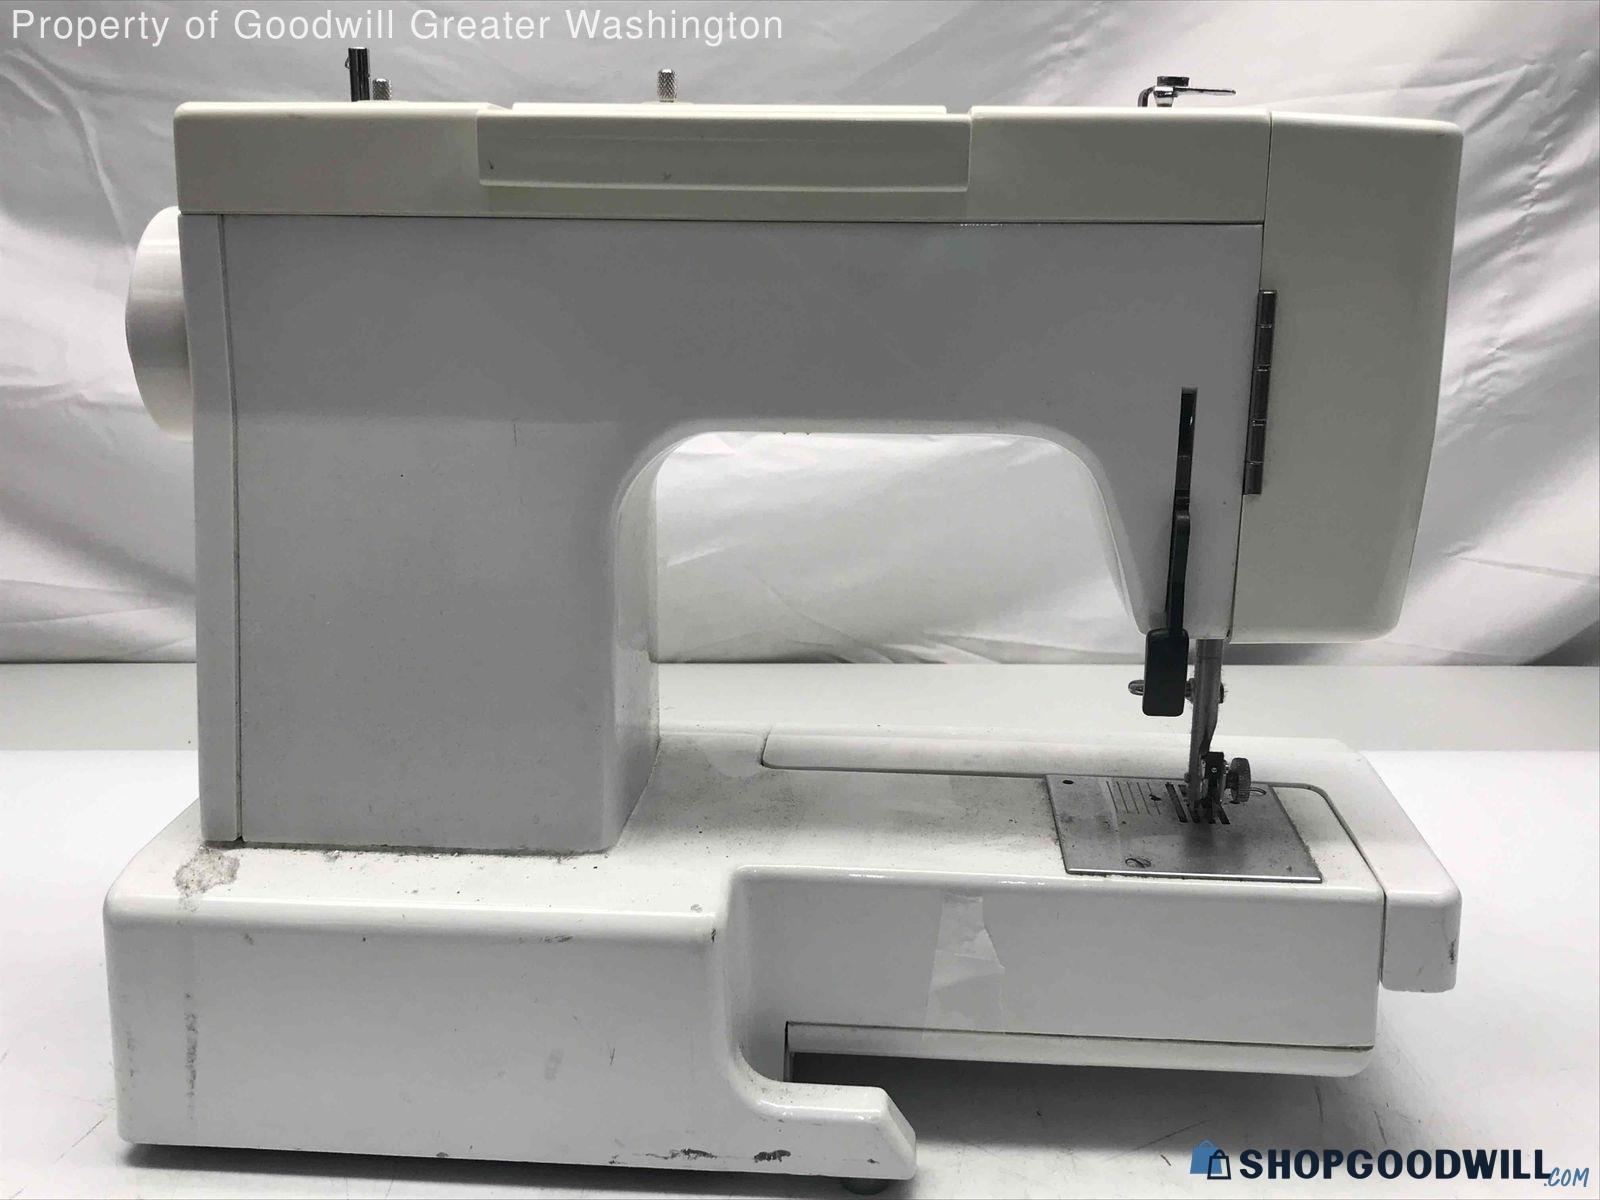 Vintage White Sewing Machine Model No. 1632 - shopgoodwill.com